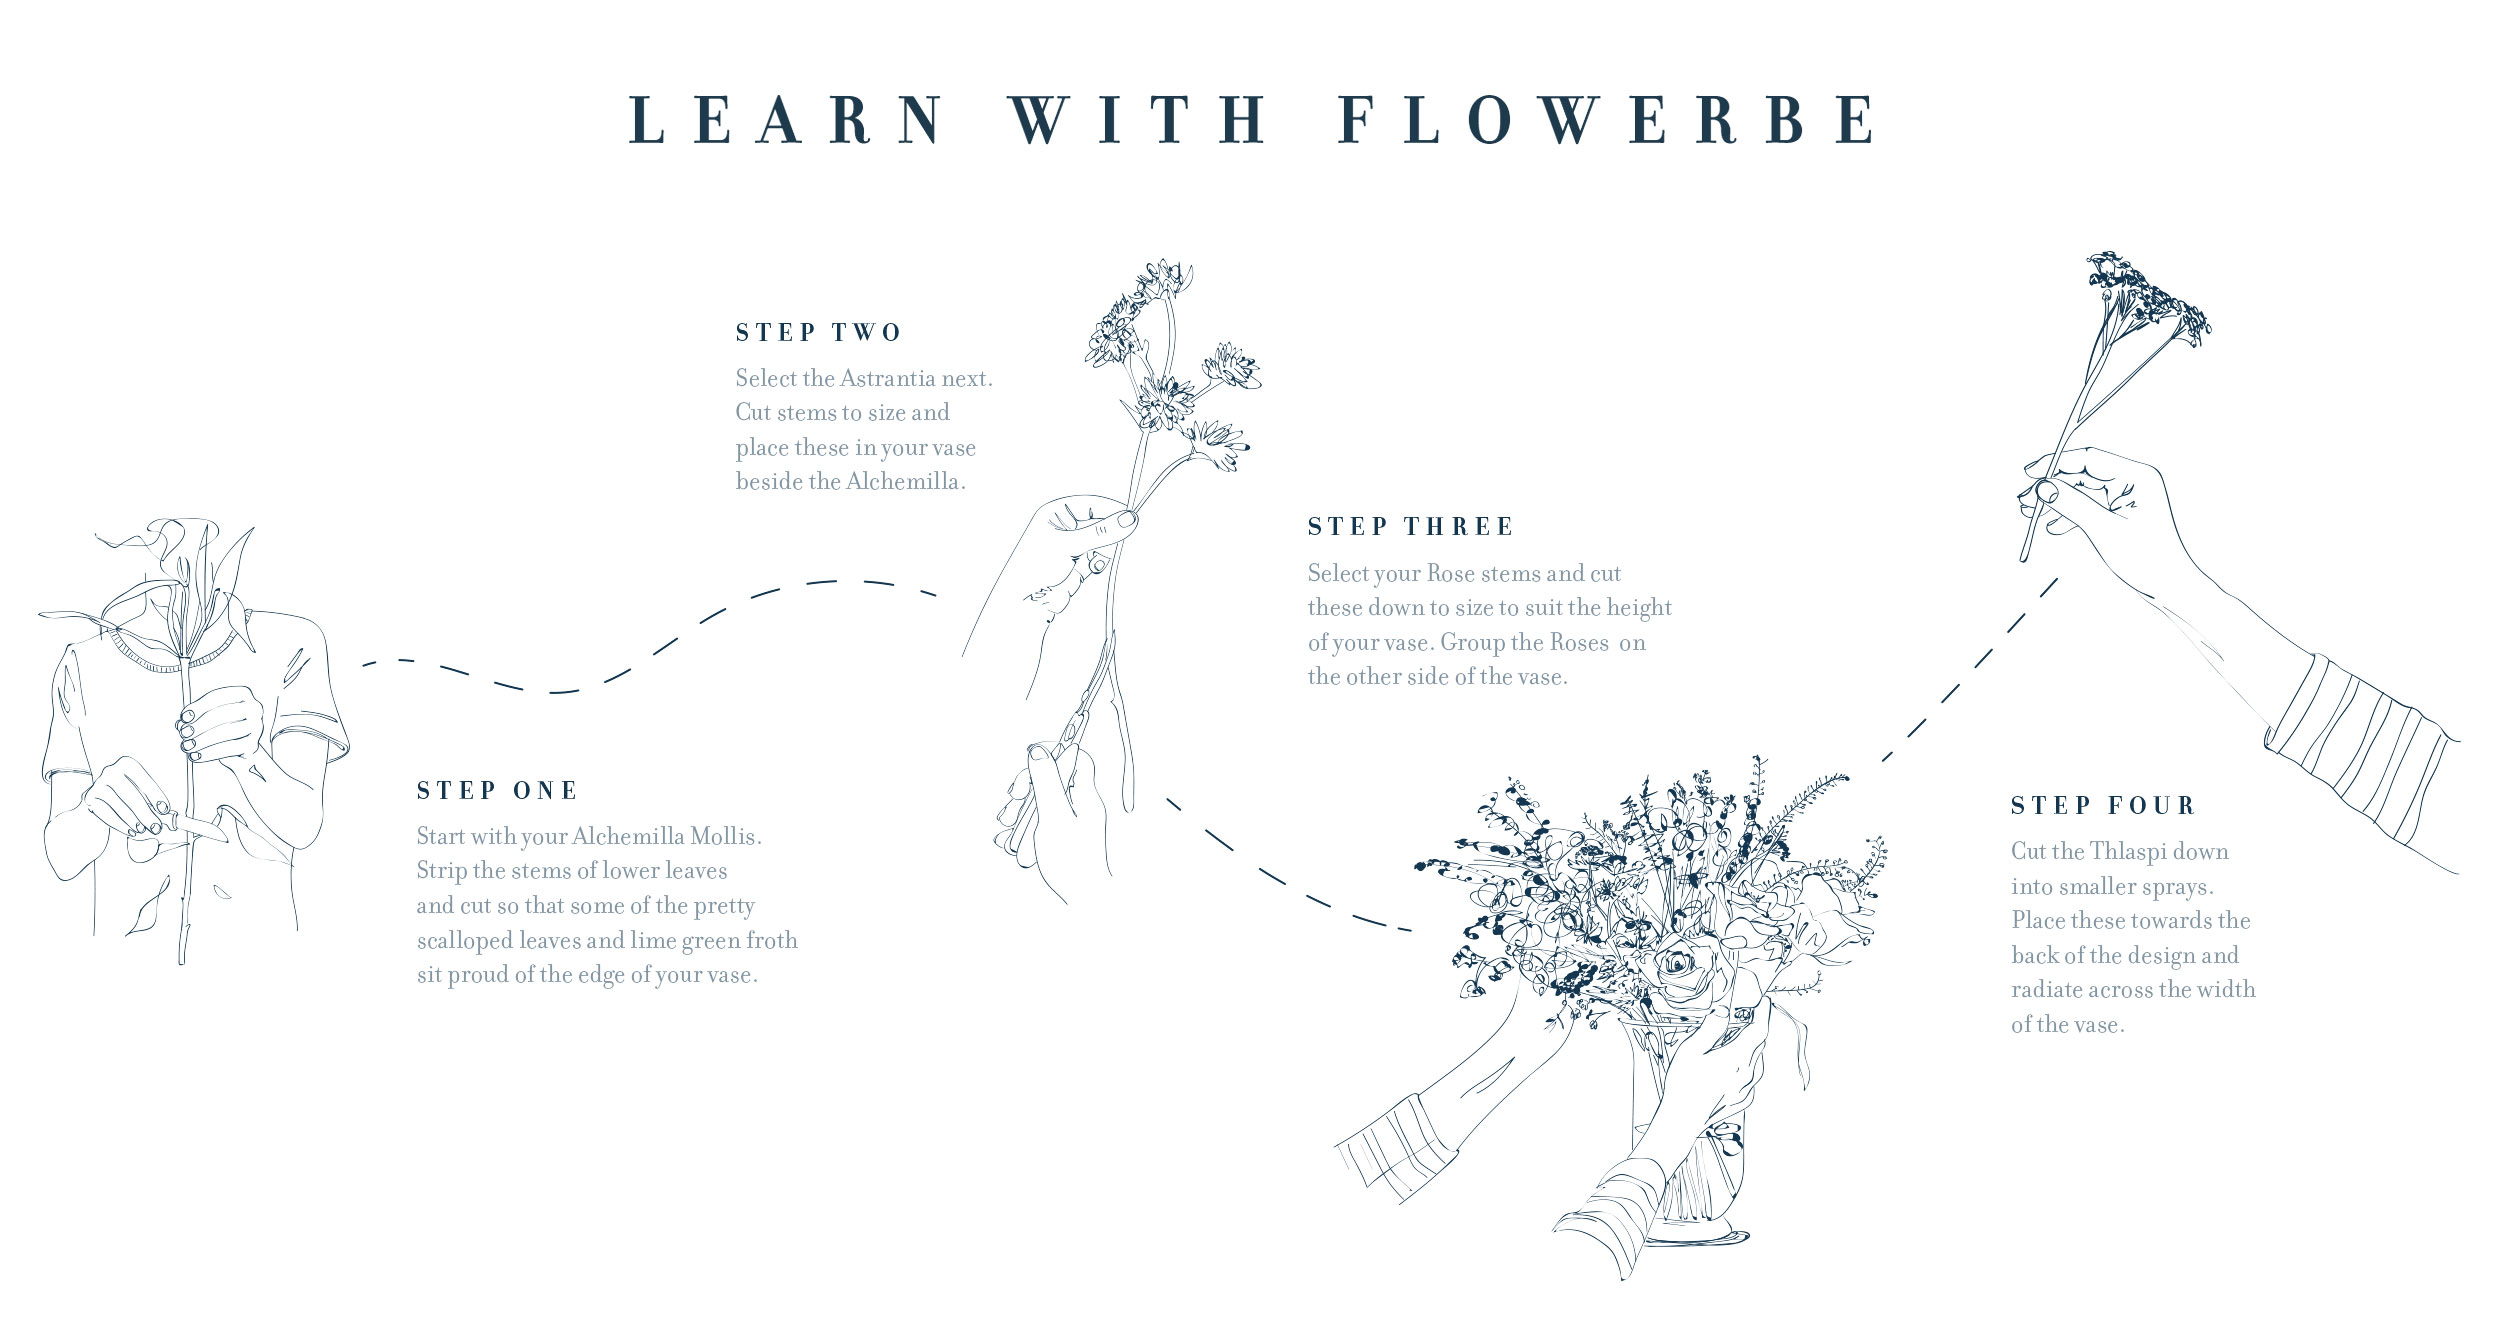 FlowerBe Florist Flowers Branding Logo Graphic Design Photography Interior Design Logo